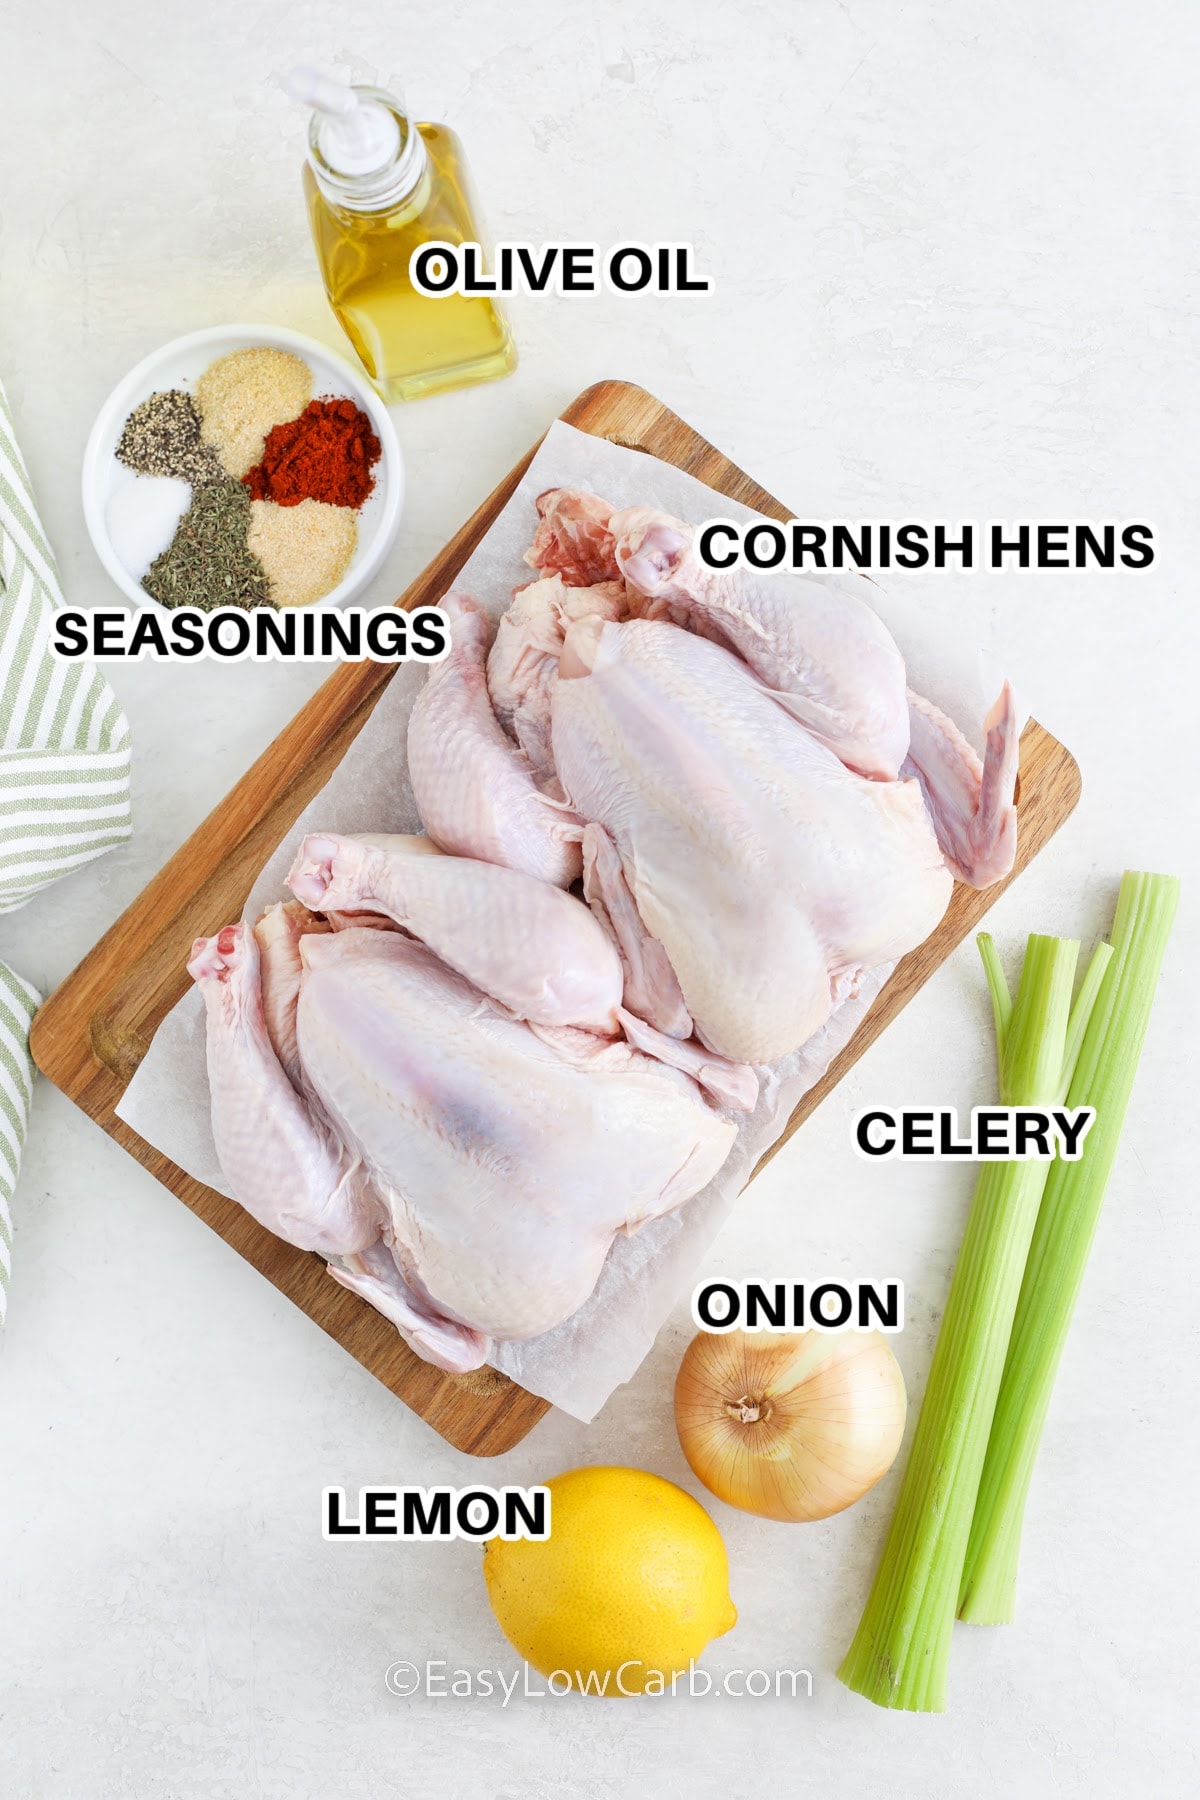 Ingredients to make roasted Cornish hens labeled: olive oil, seasonings, lemon, onion, celery, and Cornish hens.